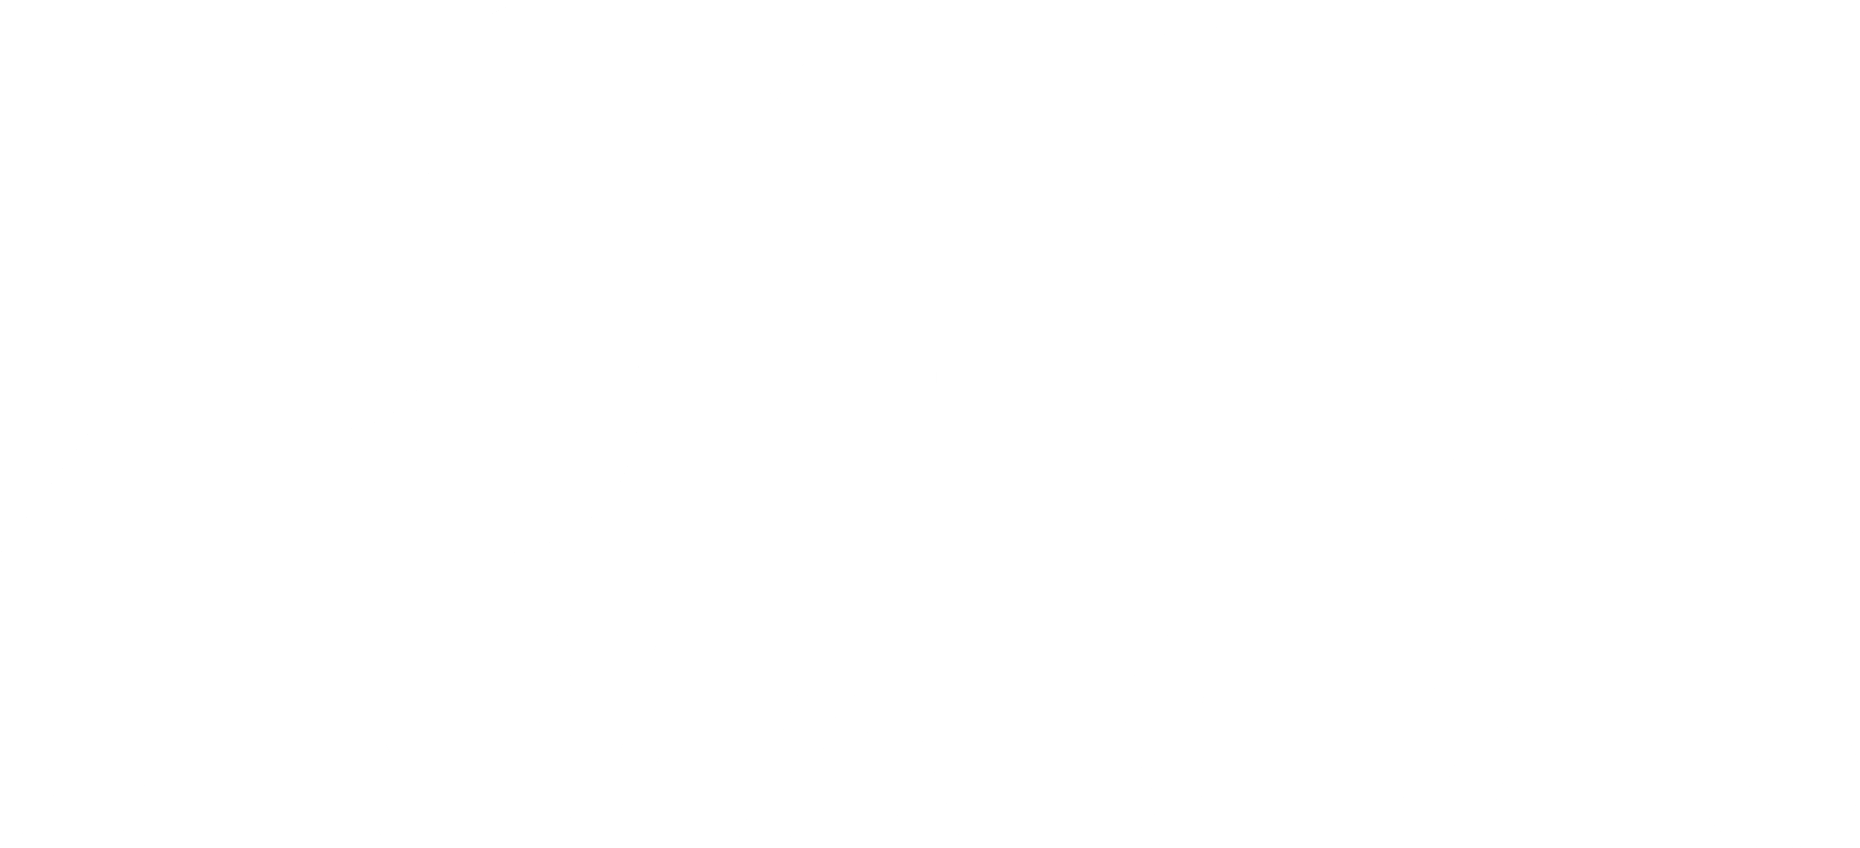 Jinma Rides Array image43